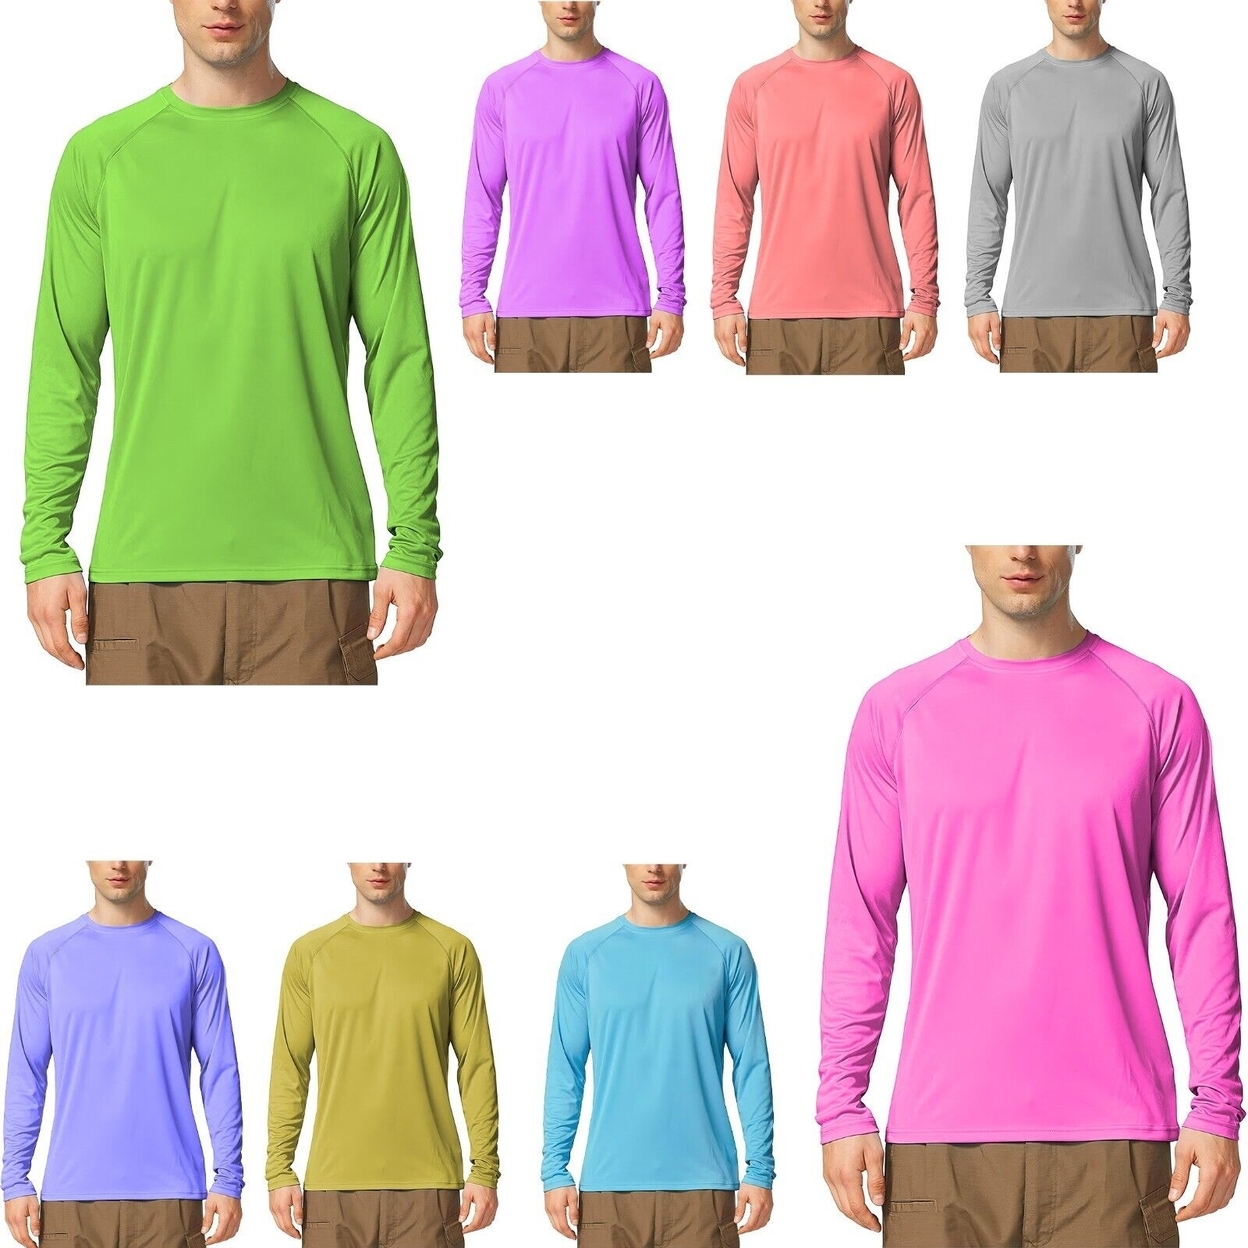 5-Pack: Men's Dri-Fit Moisture Wicking Athletic Cool Performance Slim Fit Long Sleeve T-Shirts - Medium